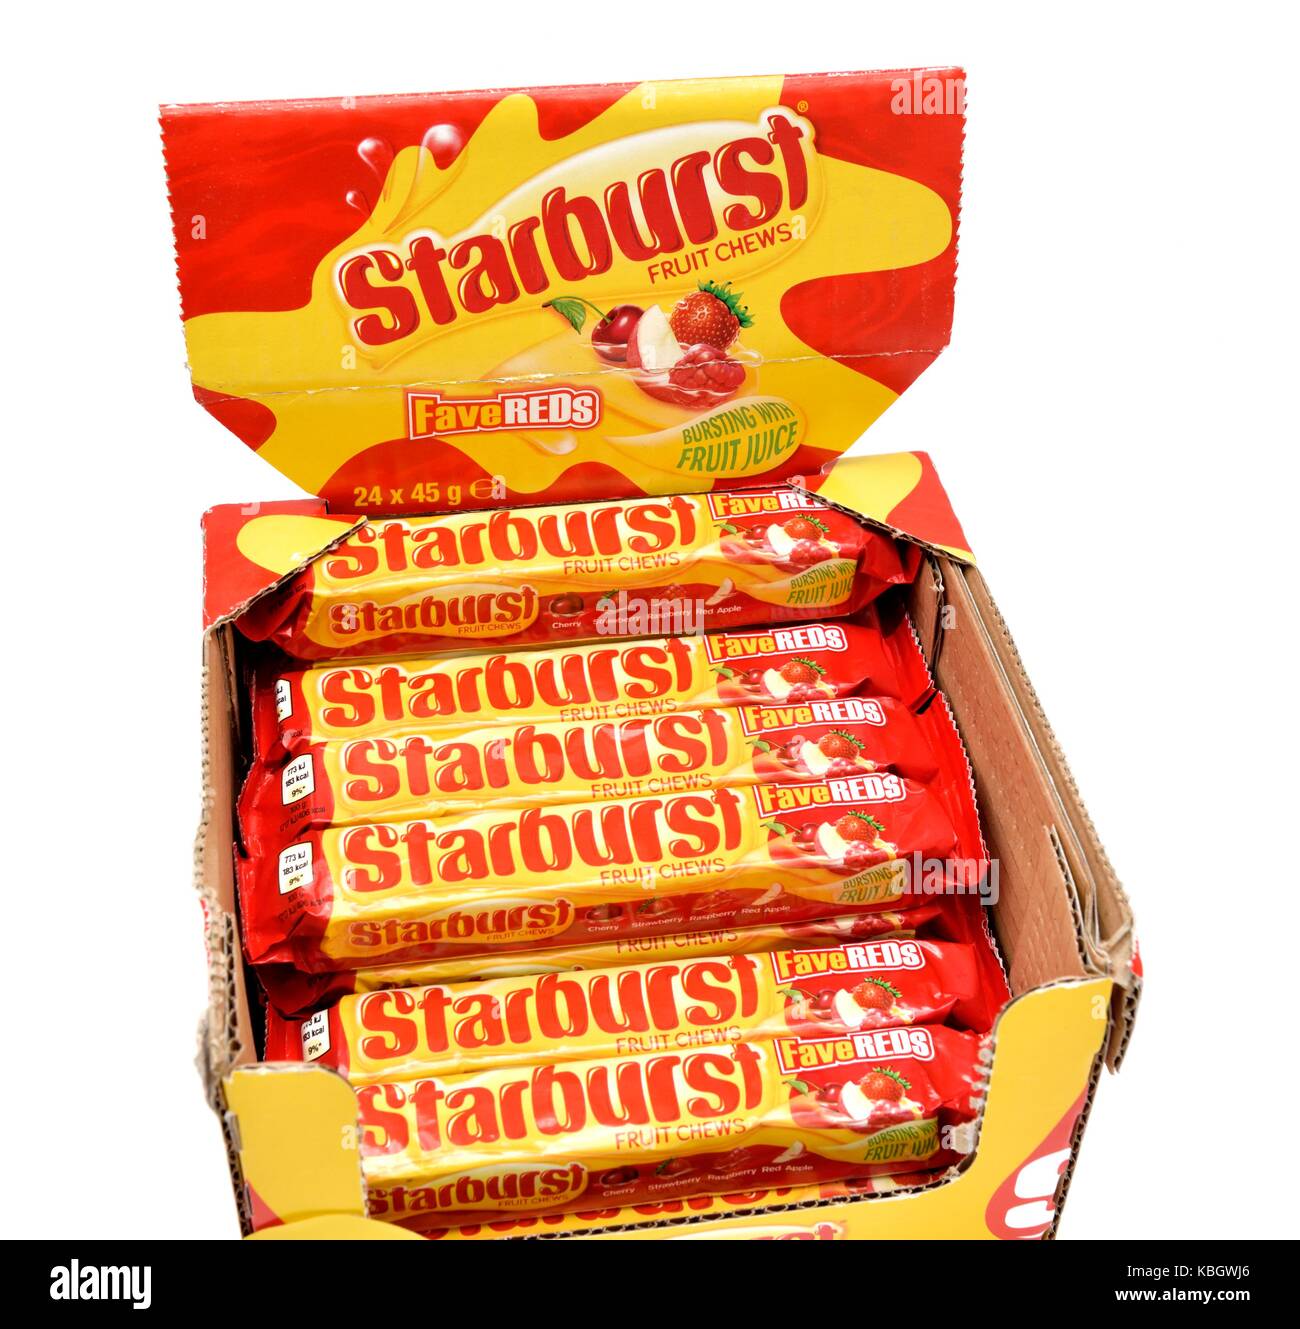 Starburst fruit chews Stock Photo